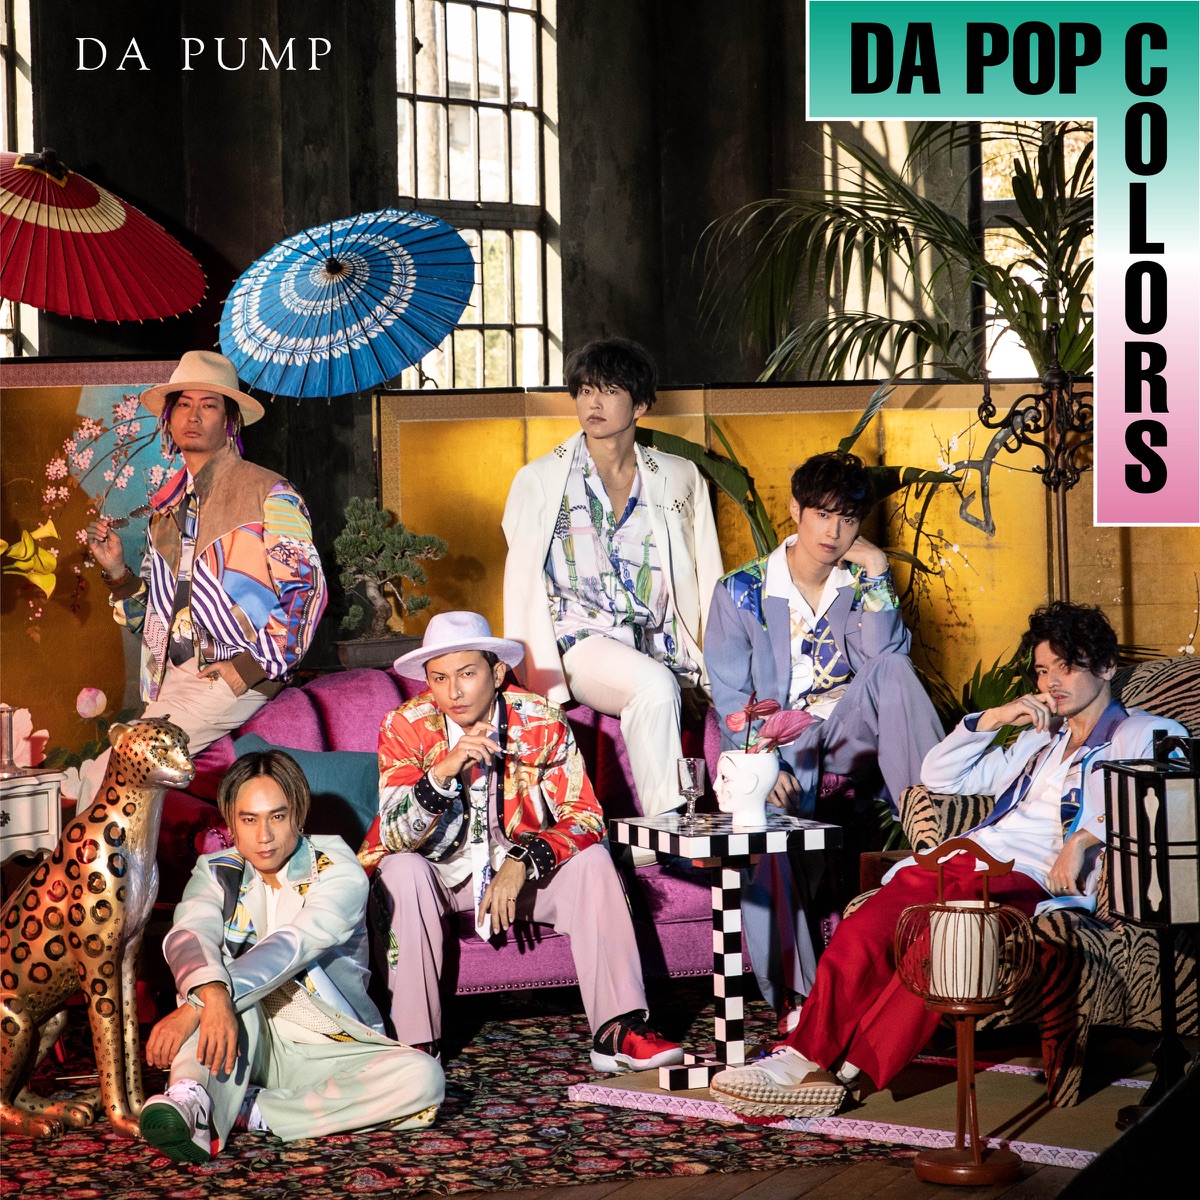 Cover art for『DA PUMP - Our Milestone』from the release『DA POP COLORS